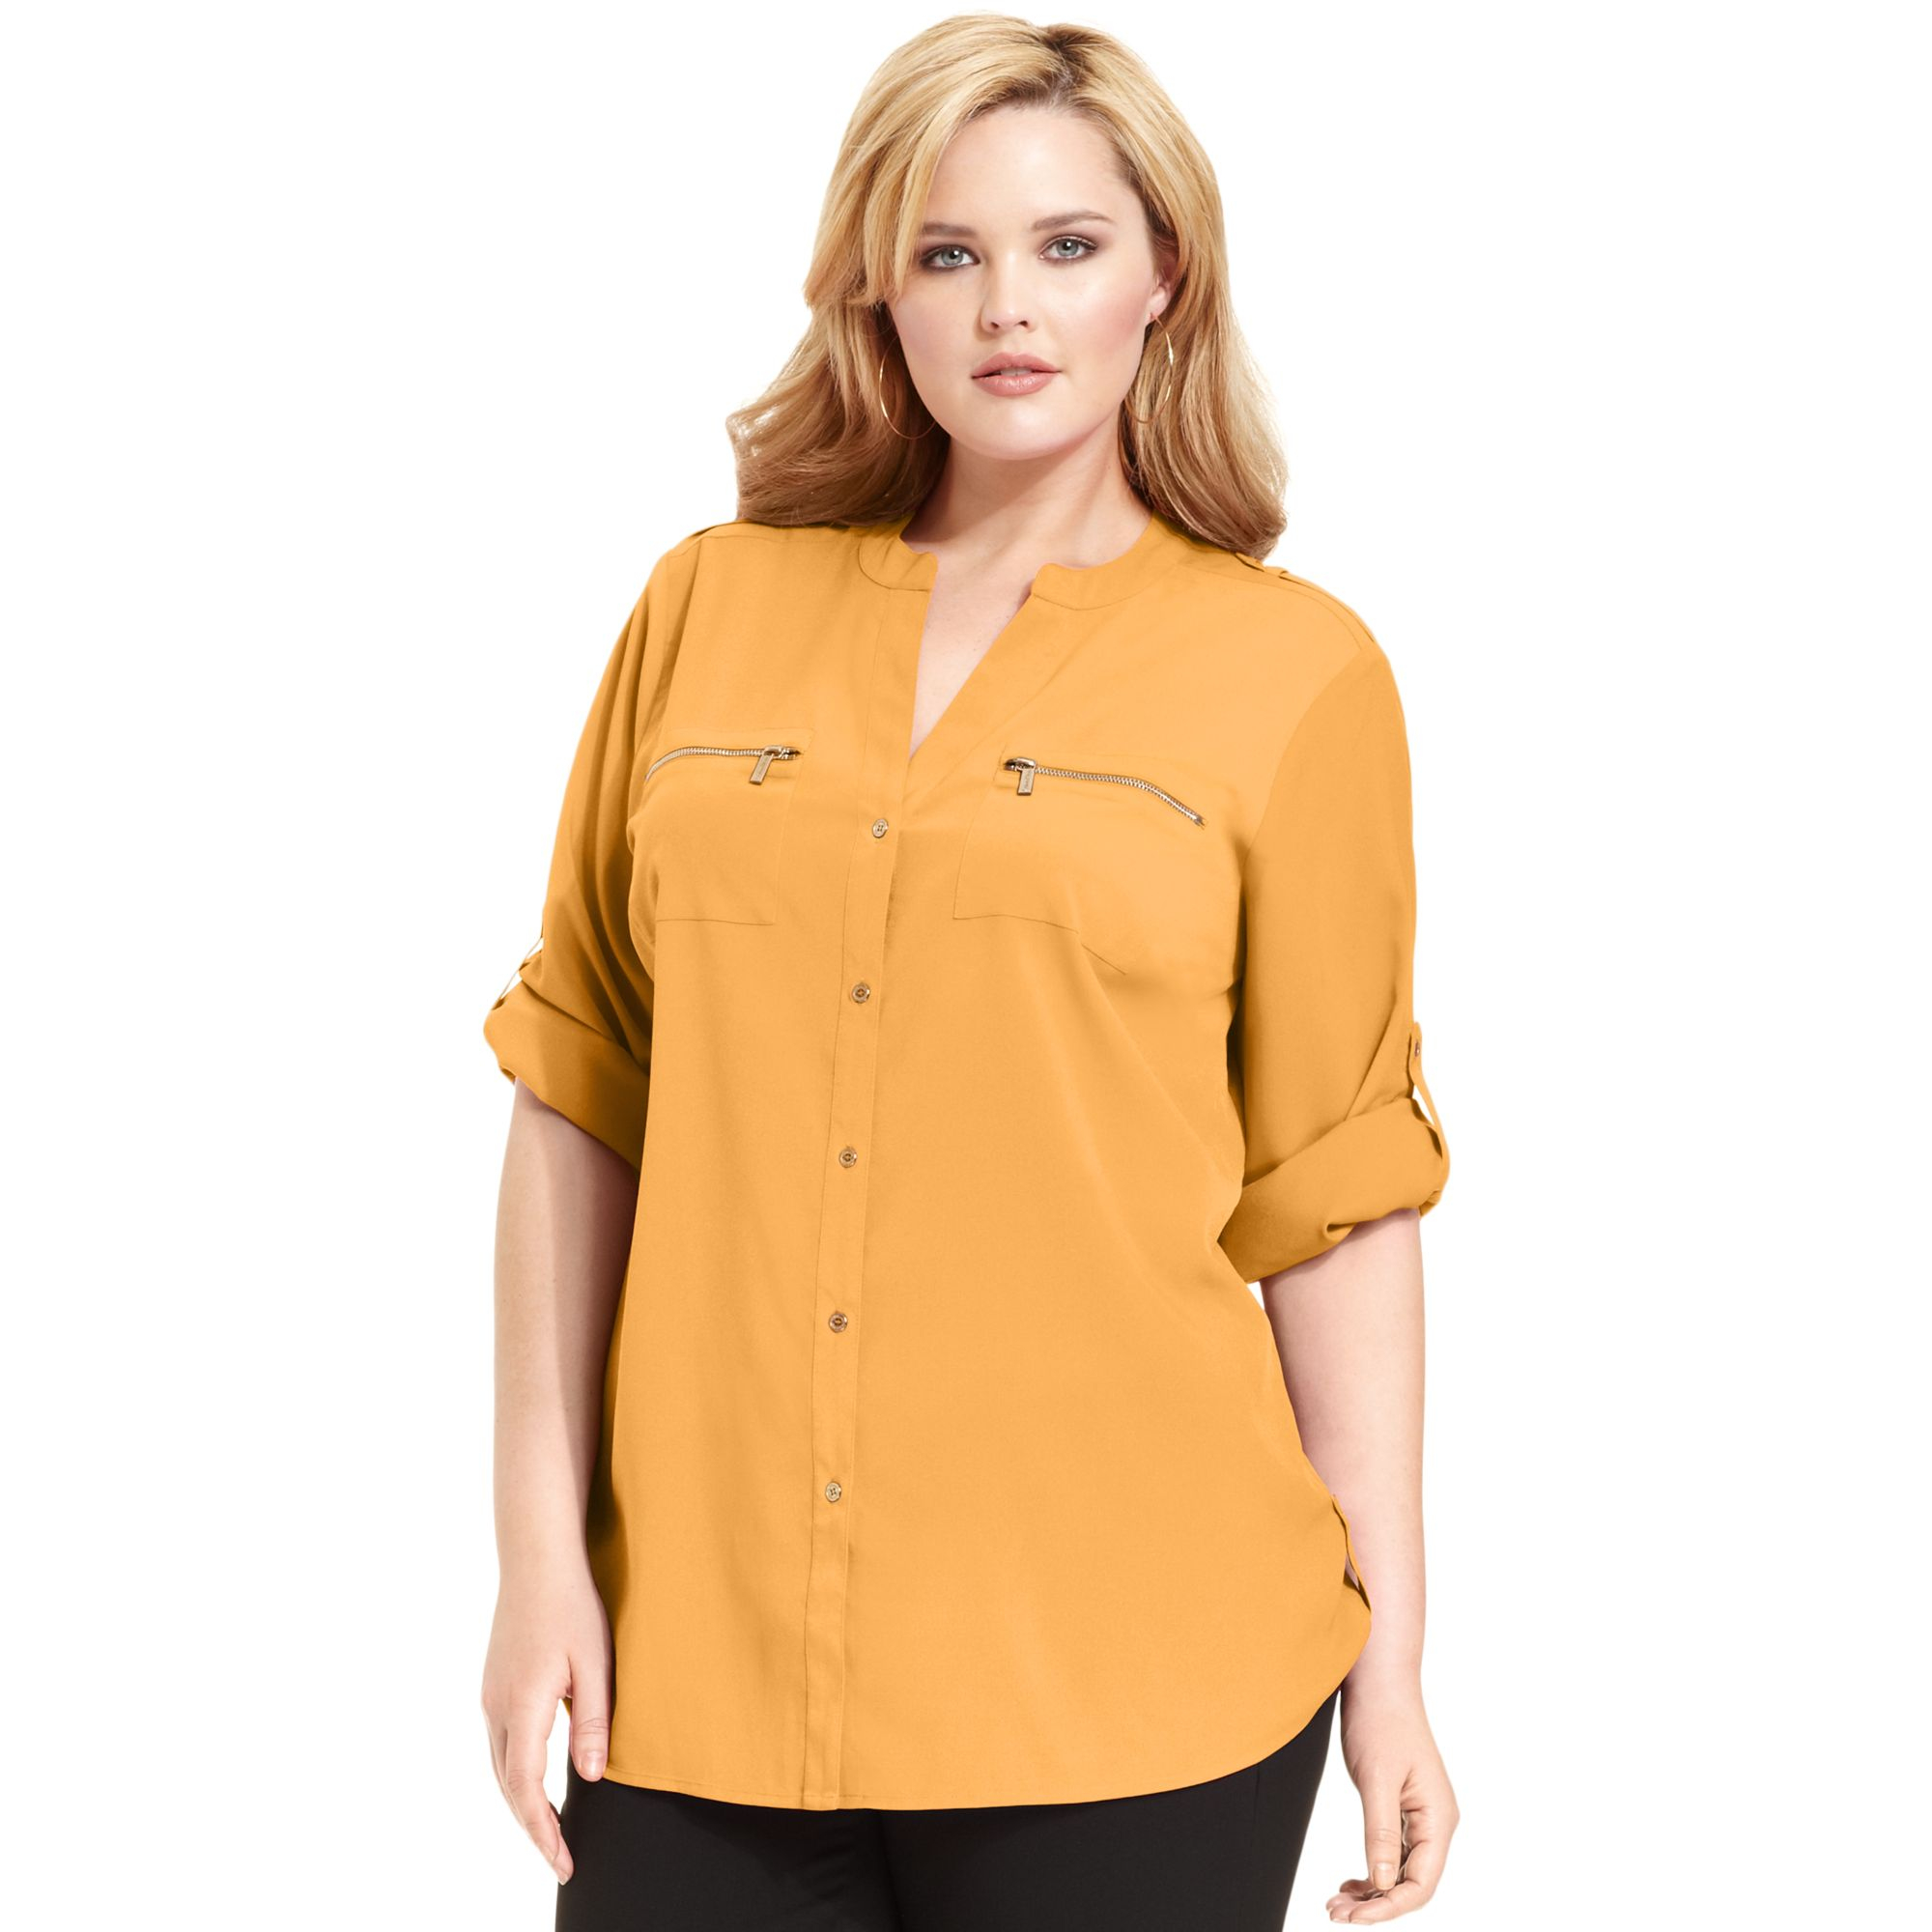 Lyst - Calvin Klein Plus Size Rolltabsleeve Utility Shirt in Yellow